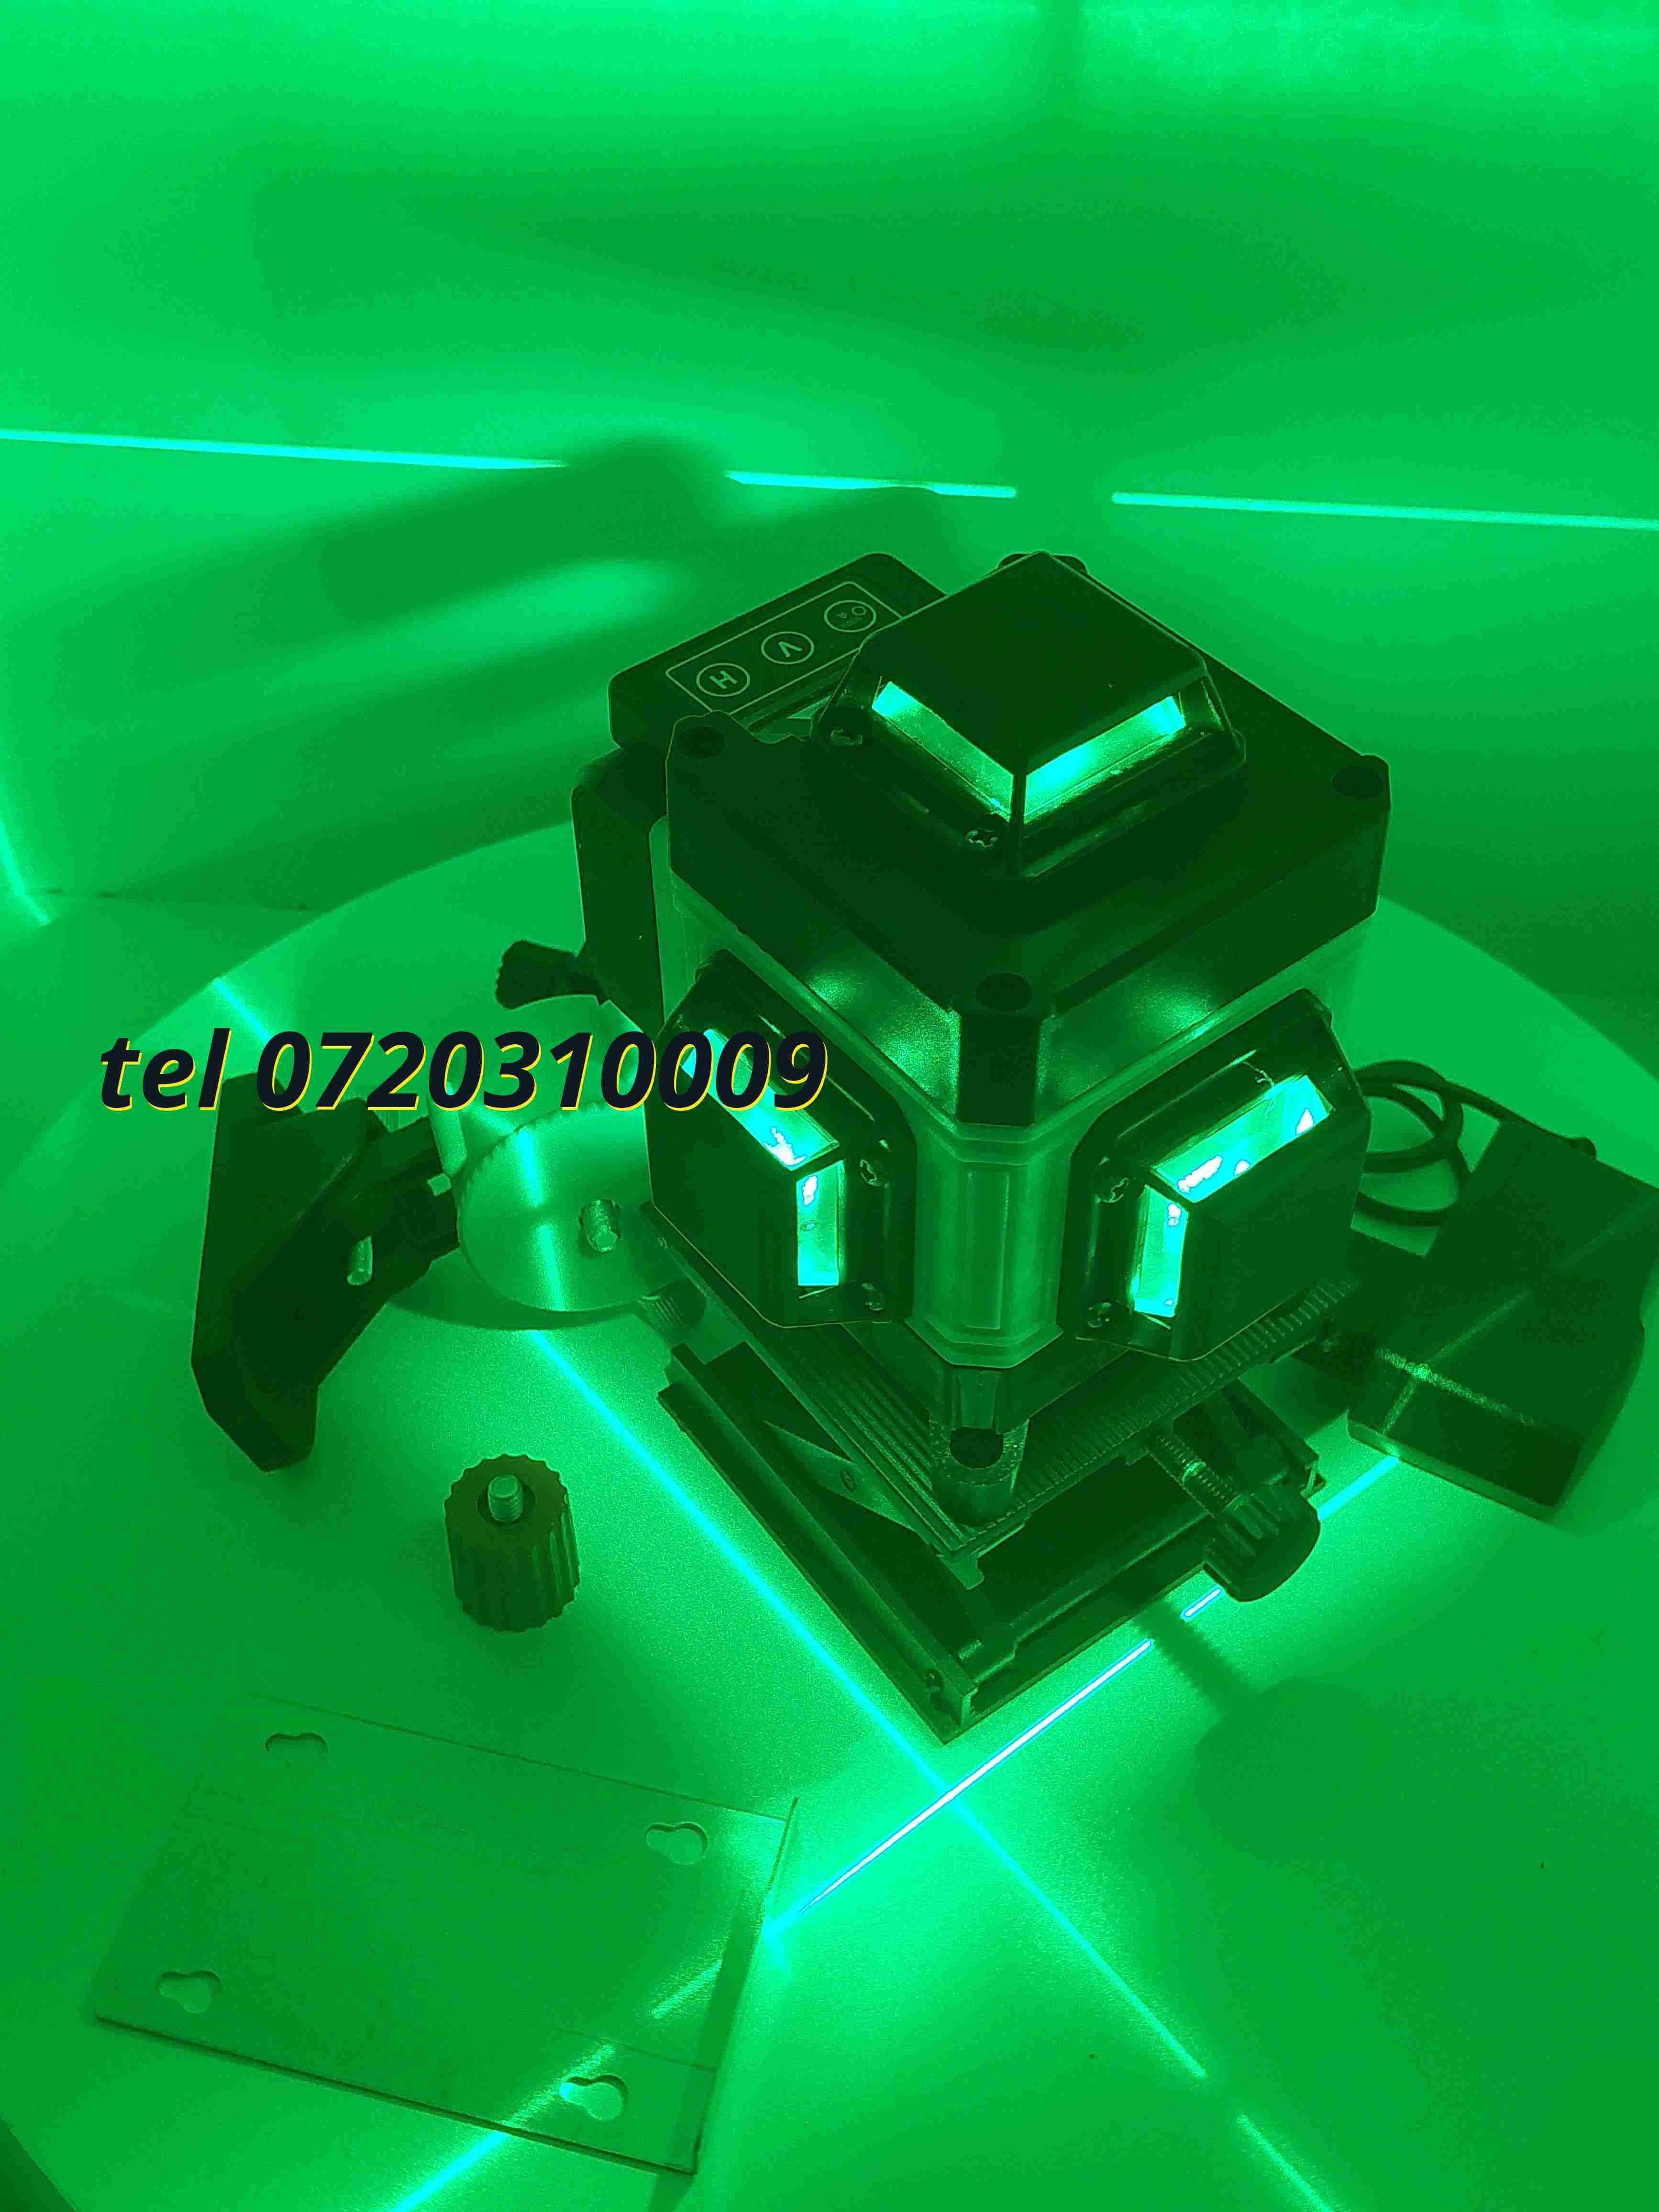 Reducere  Nivela Laser  Laser Verde 16 Lini 4d Cu Telecomanda